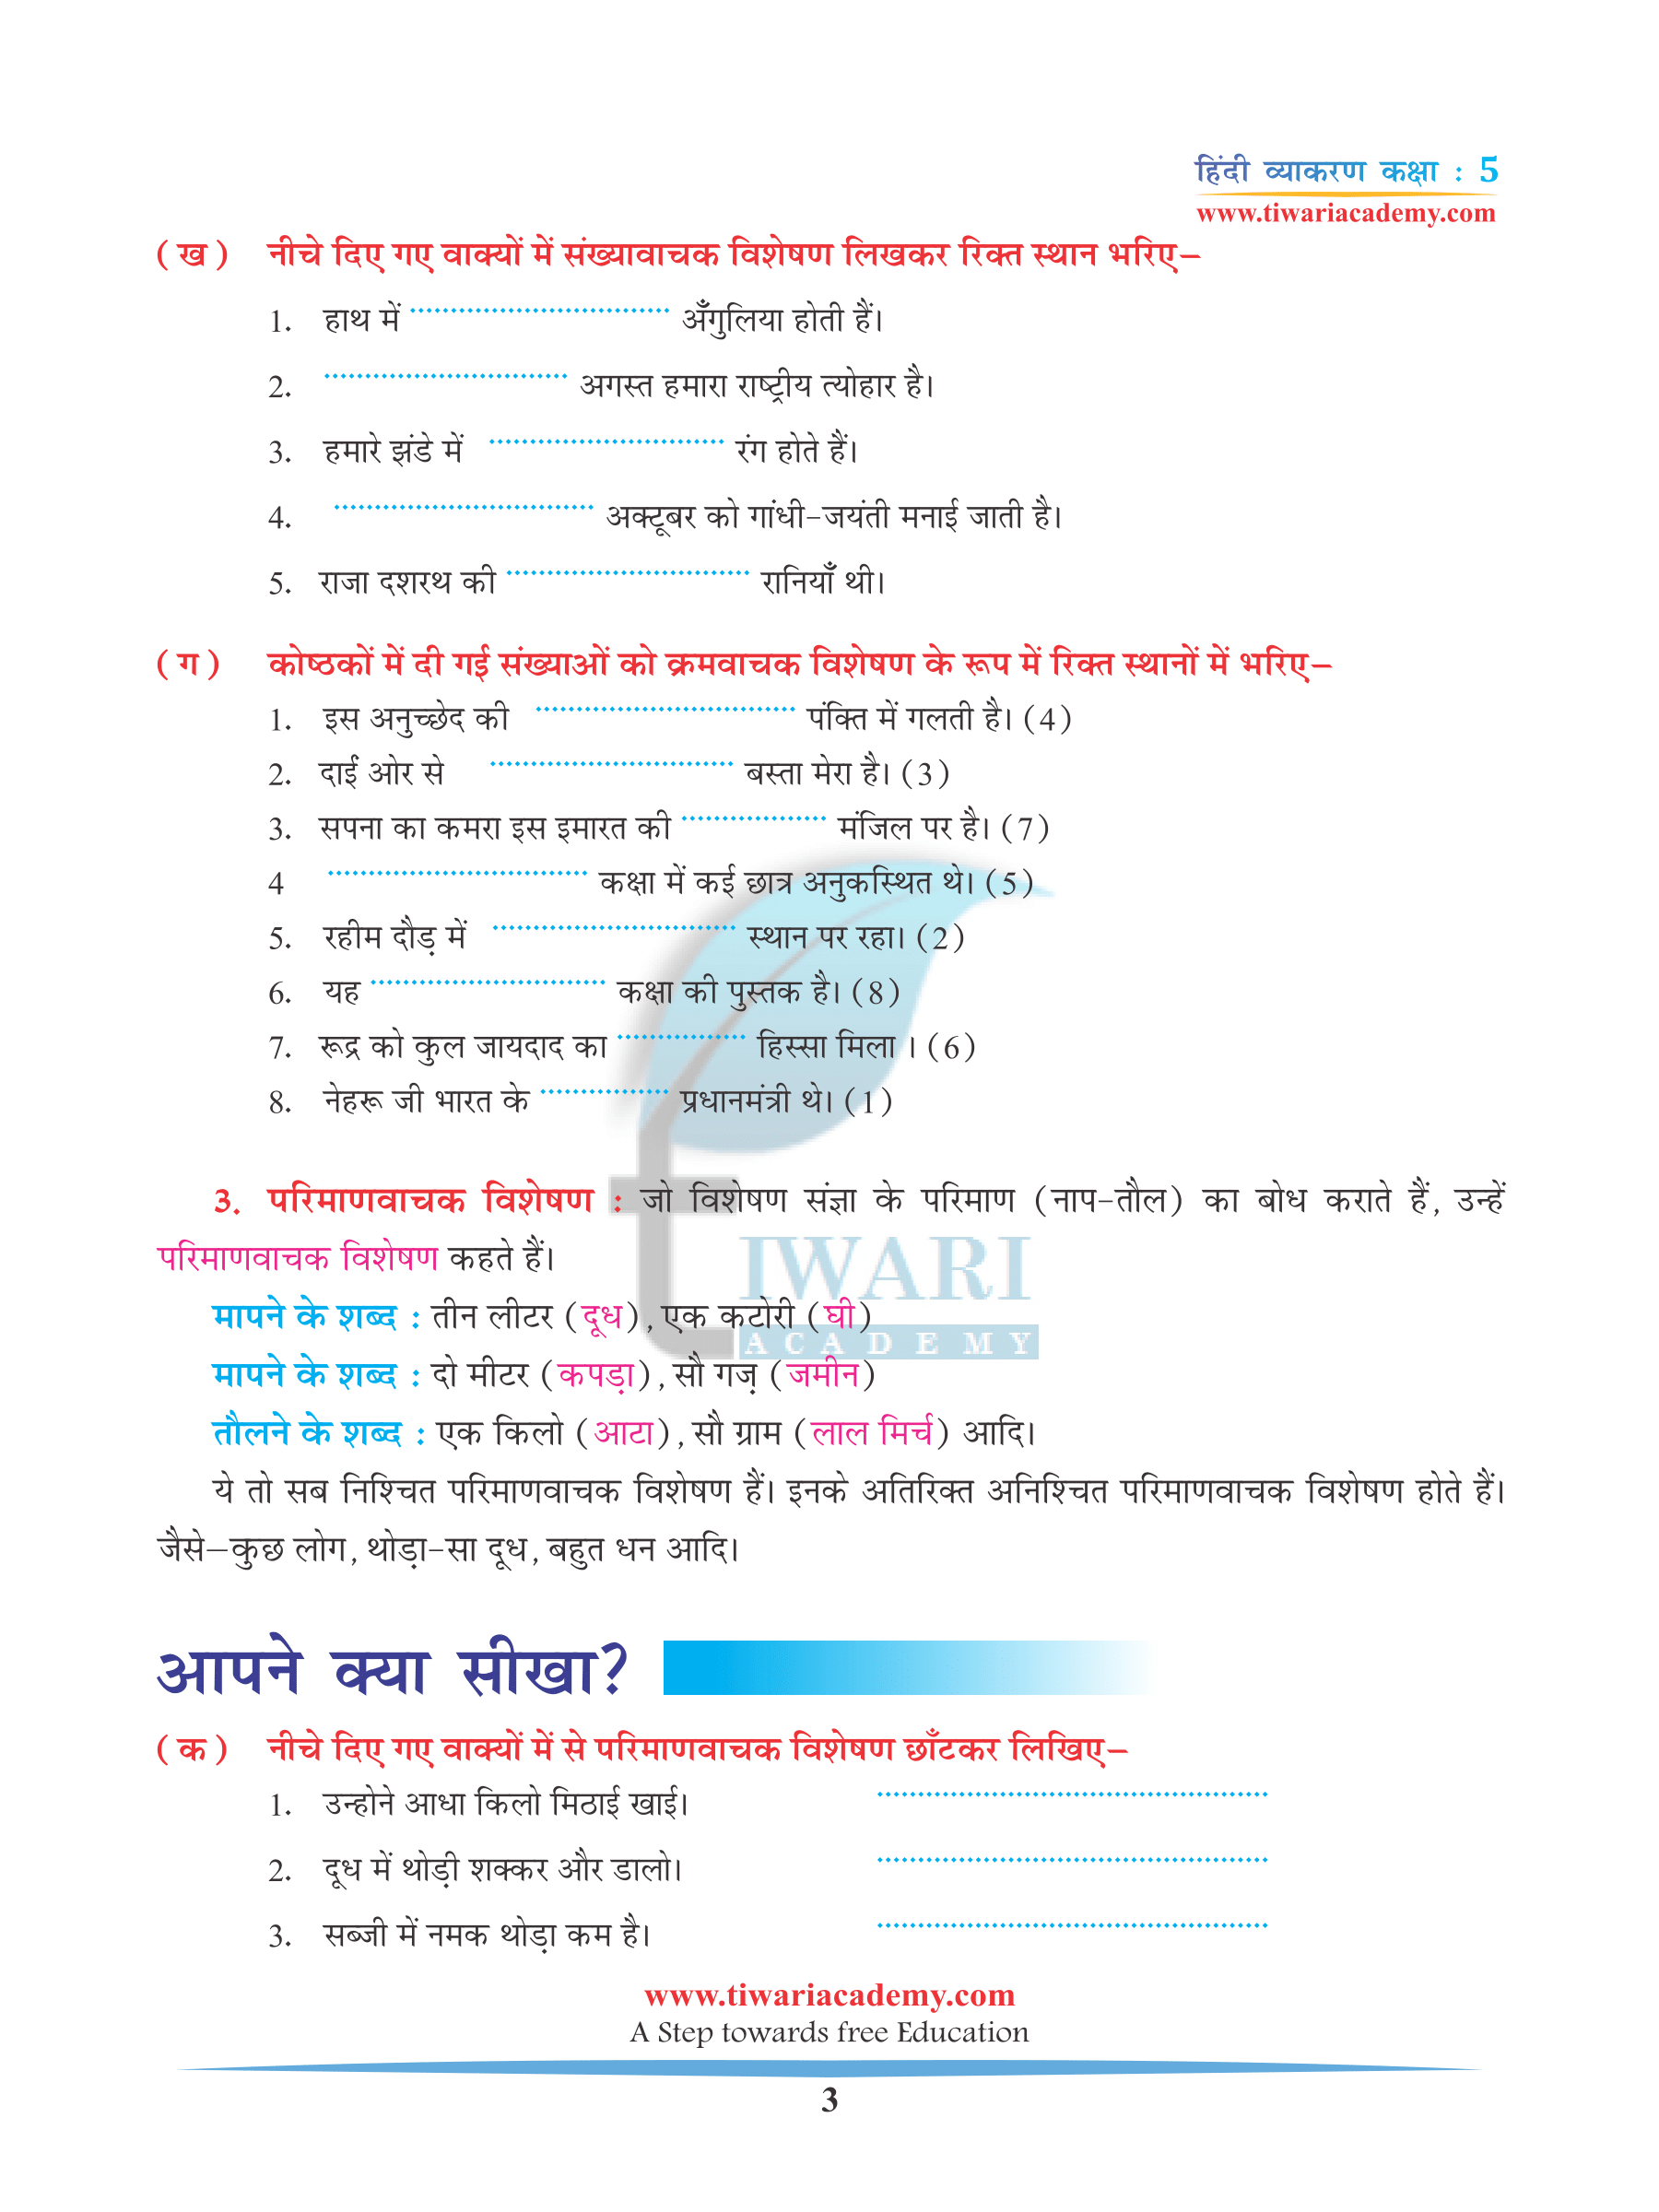 CBSE Class 5 Hindi Grammar Chapter 6 Visheshan